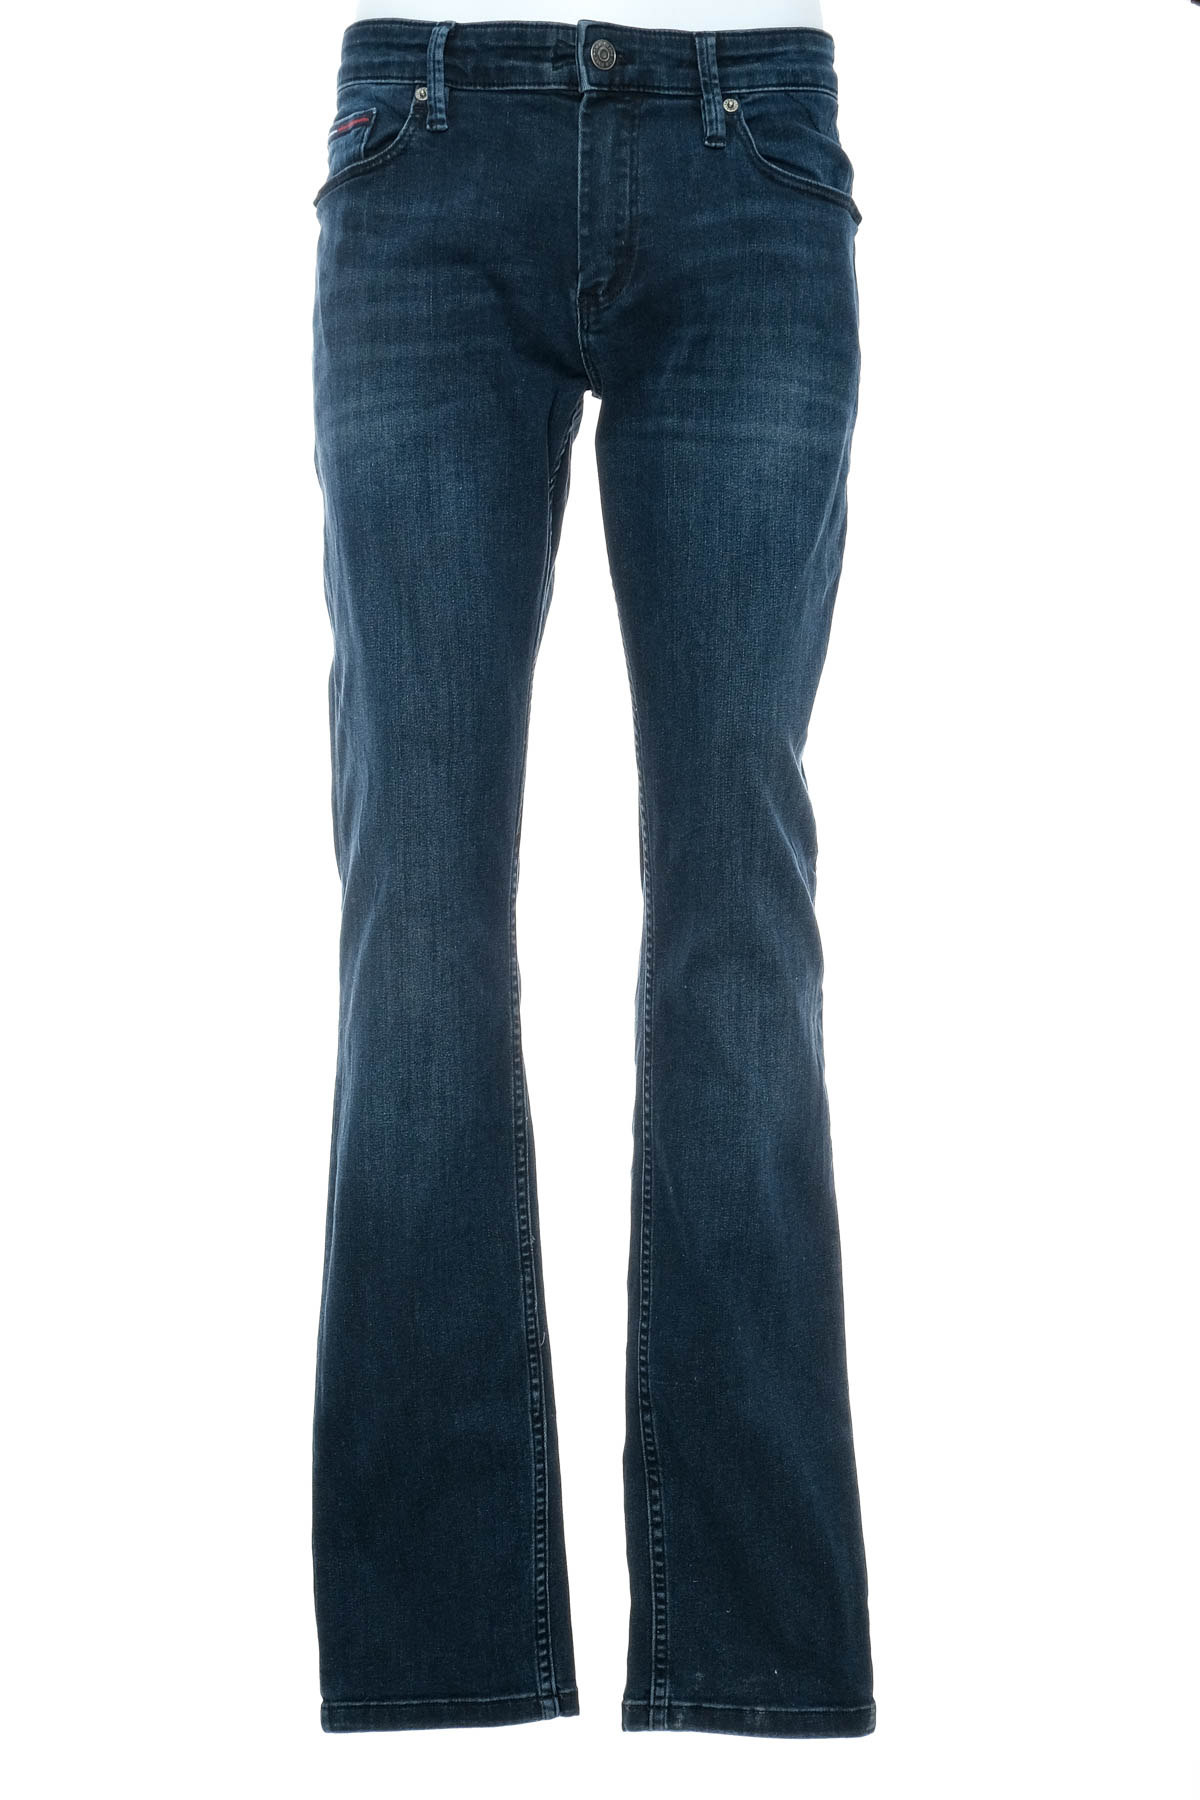 Men's jeans - TOMMY JEANS - 0